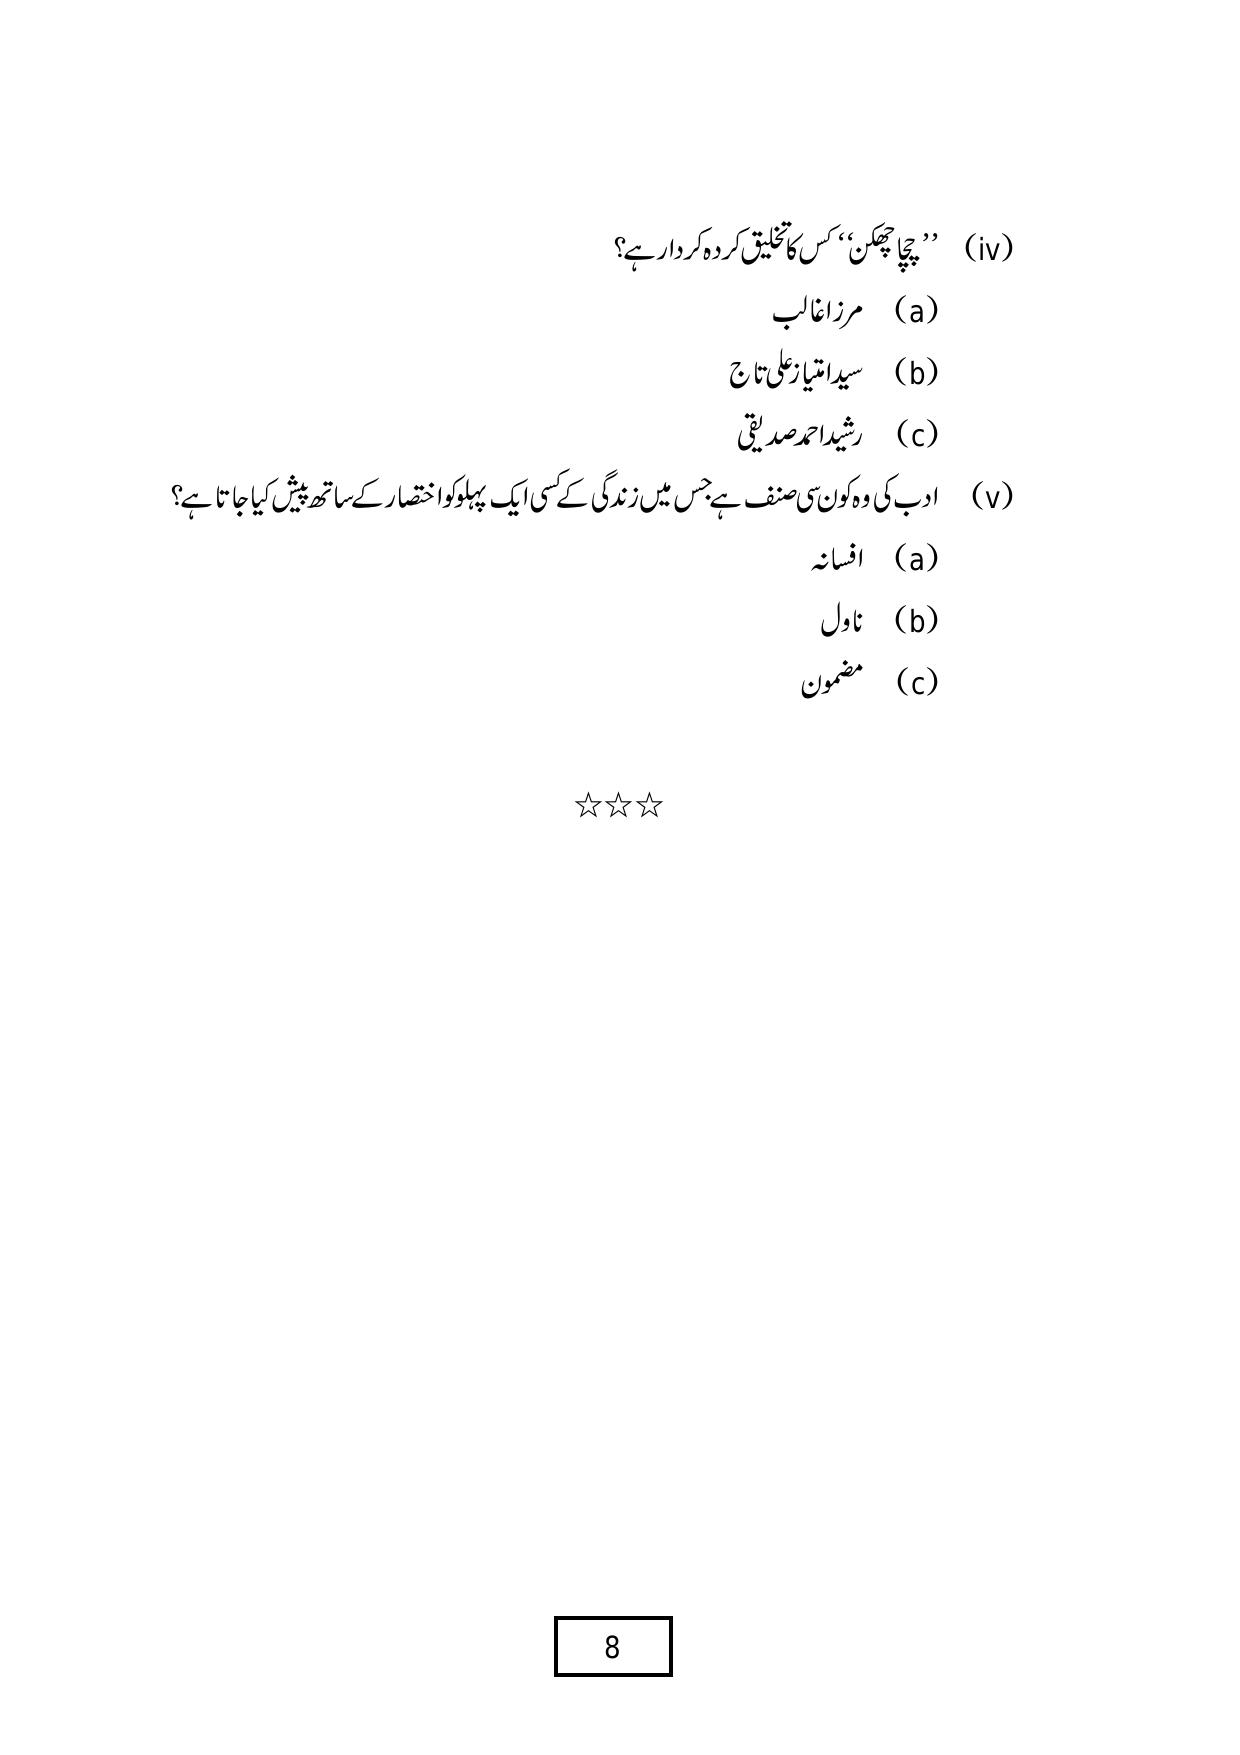 CBSE Class 12 Urdu Core -Sample Paper 2019-20 - Page 8